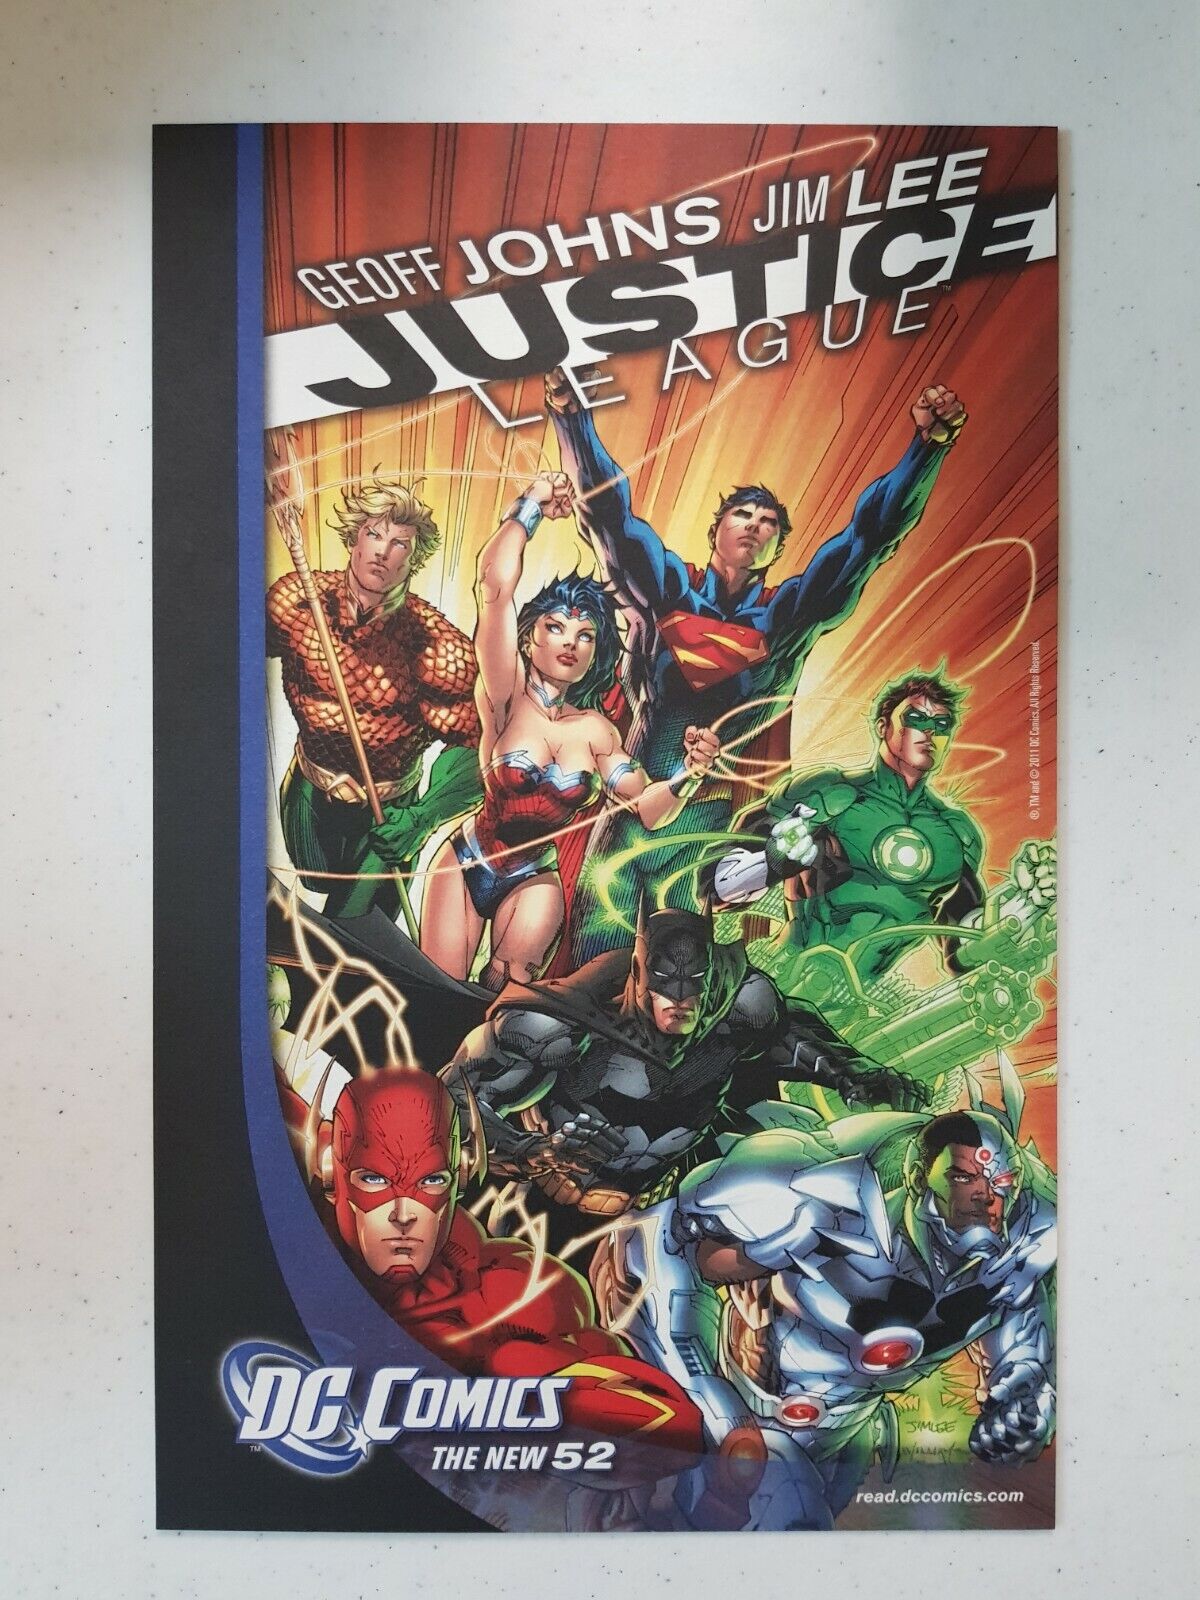 RARE Comic Insert Board Justice League Johns Lee New 52 Big Bang Theory Show TV